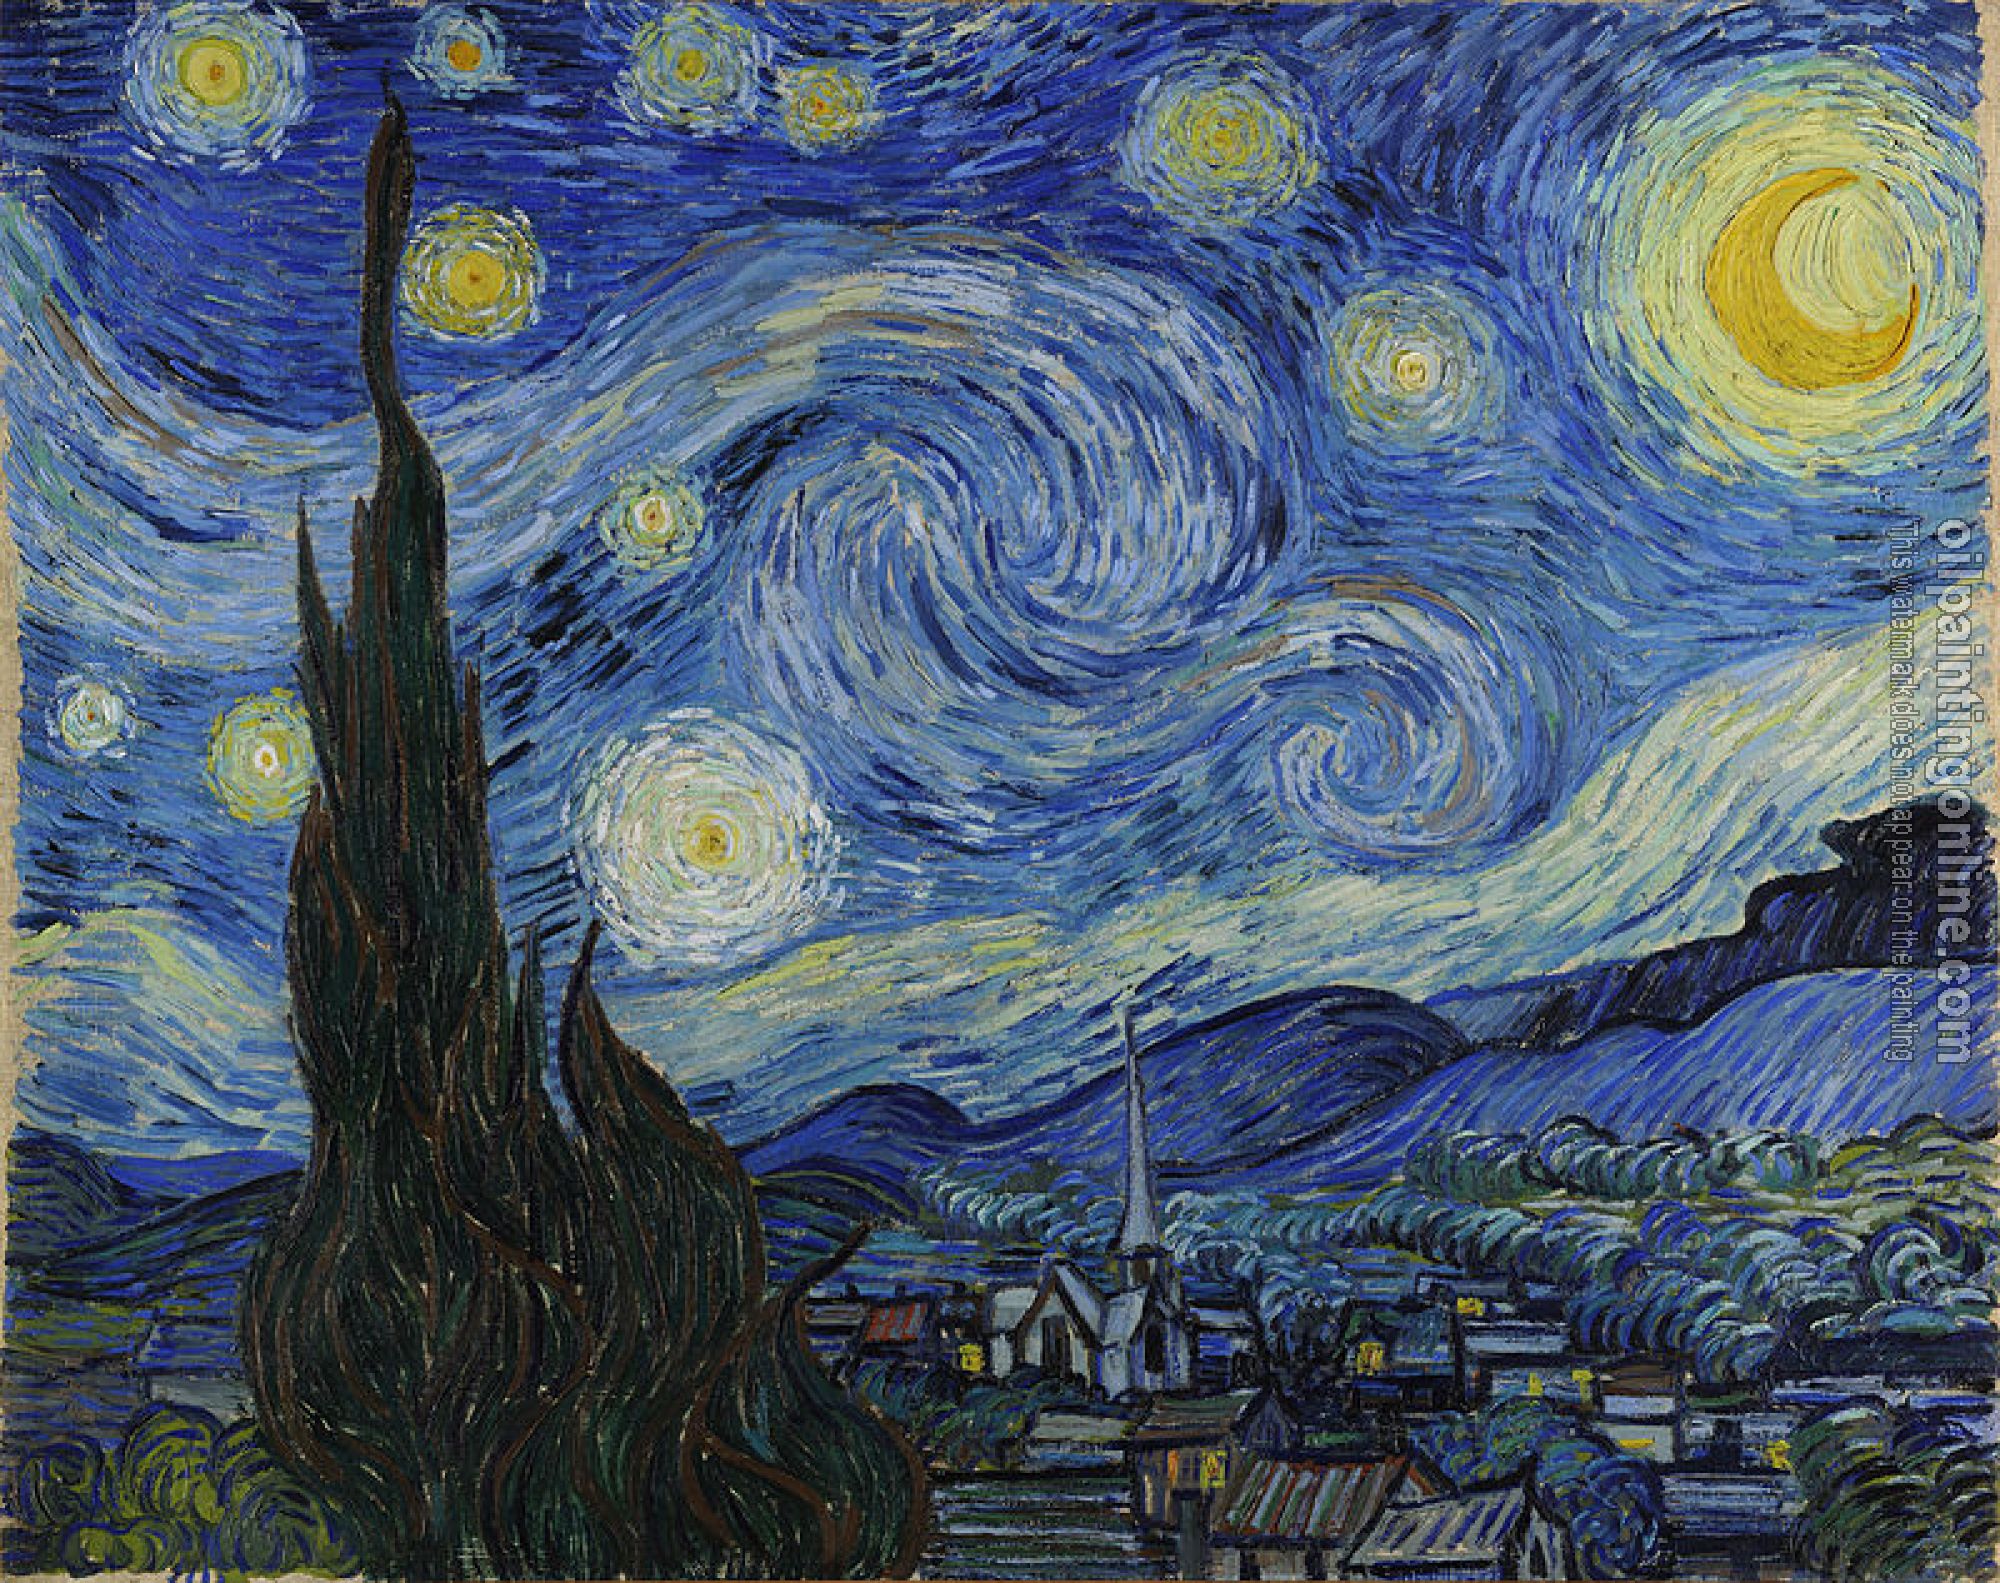 Gogh, Vincent van - The starry night